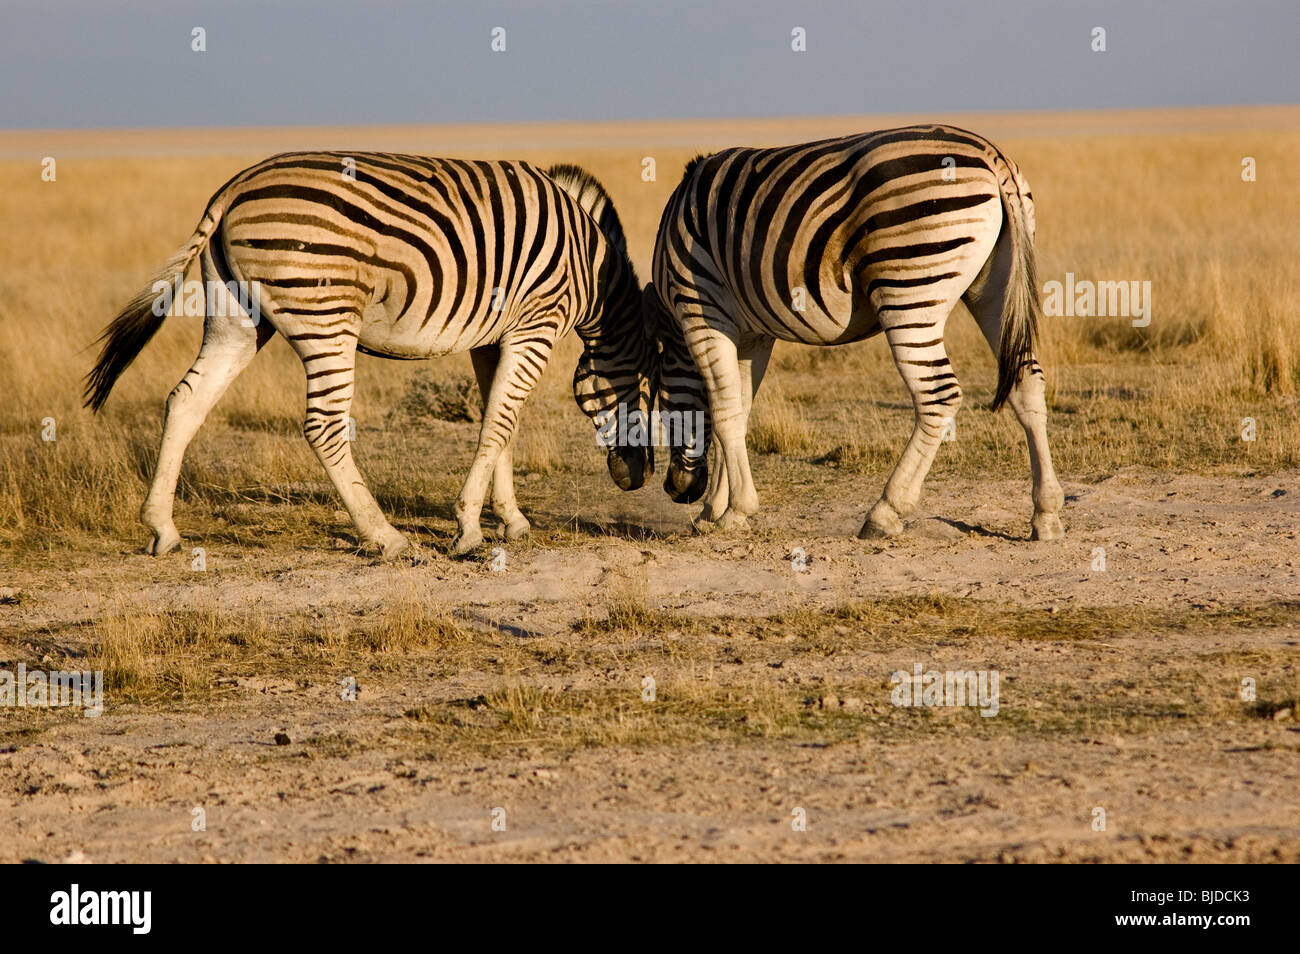 two zebras rubbing heads Stock Photo